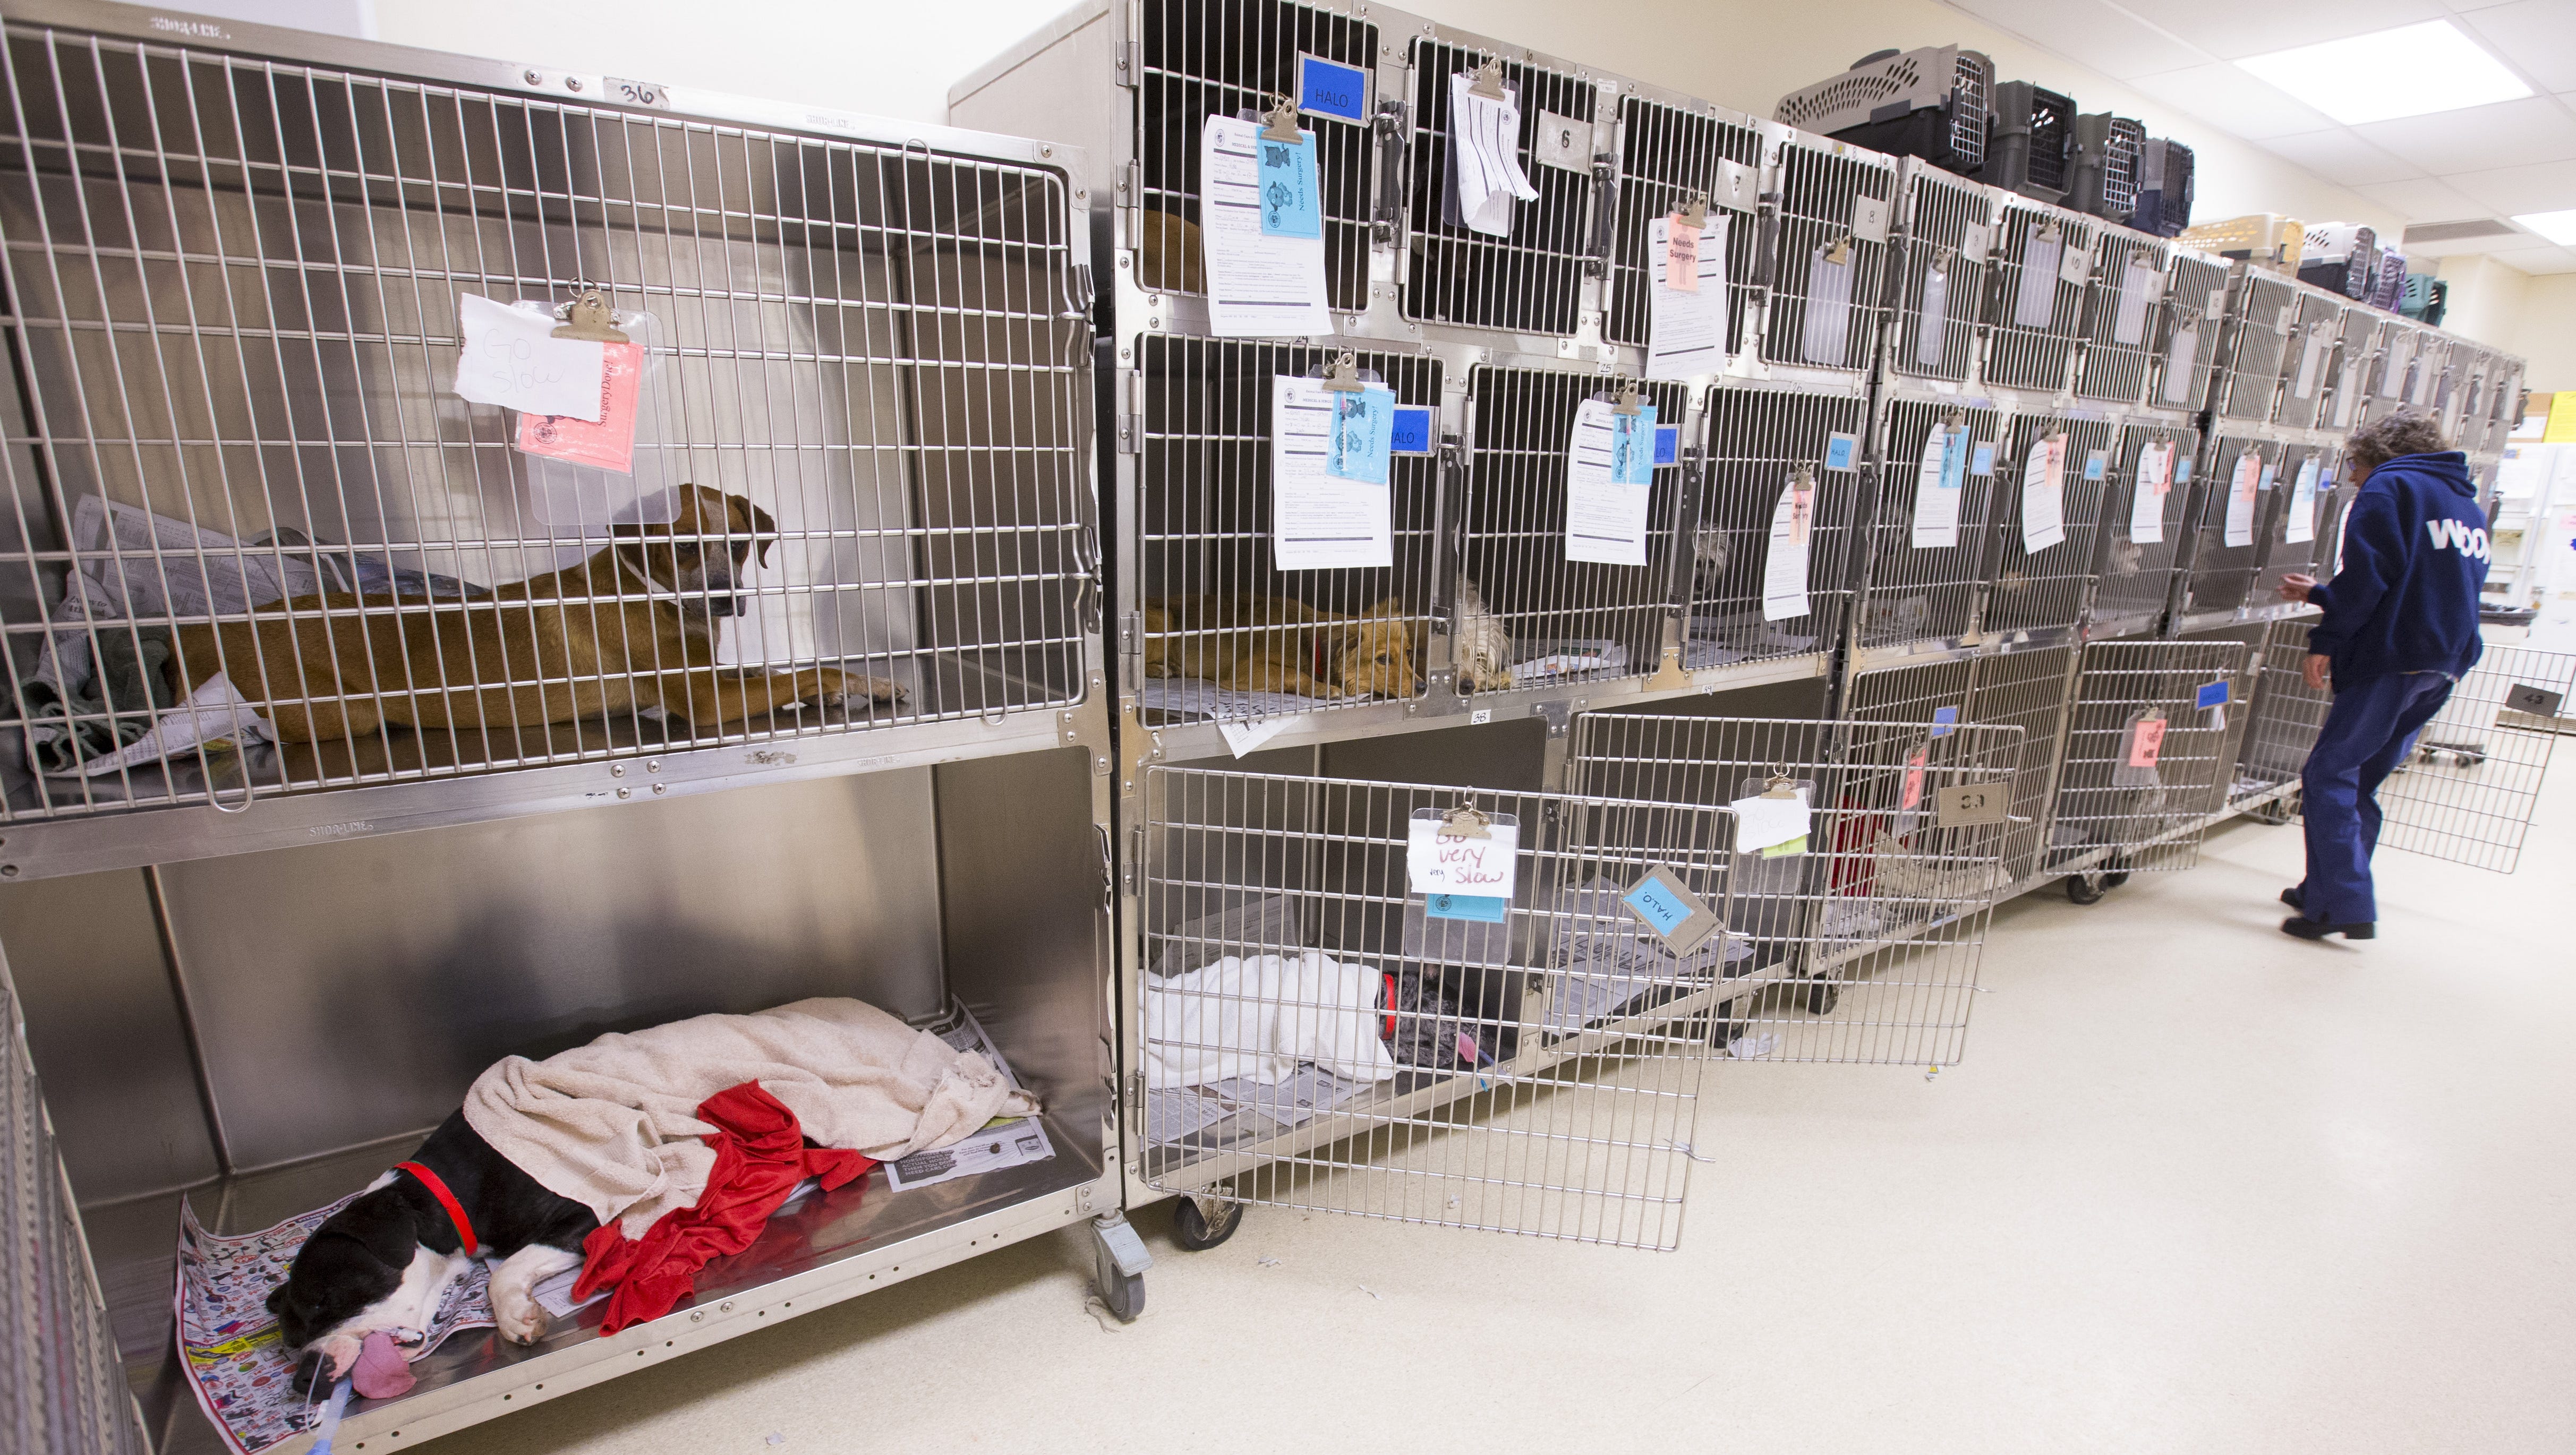 Mesa animal shelter seeks volunteer dog walkers for 200 healthy dogs